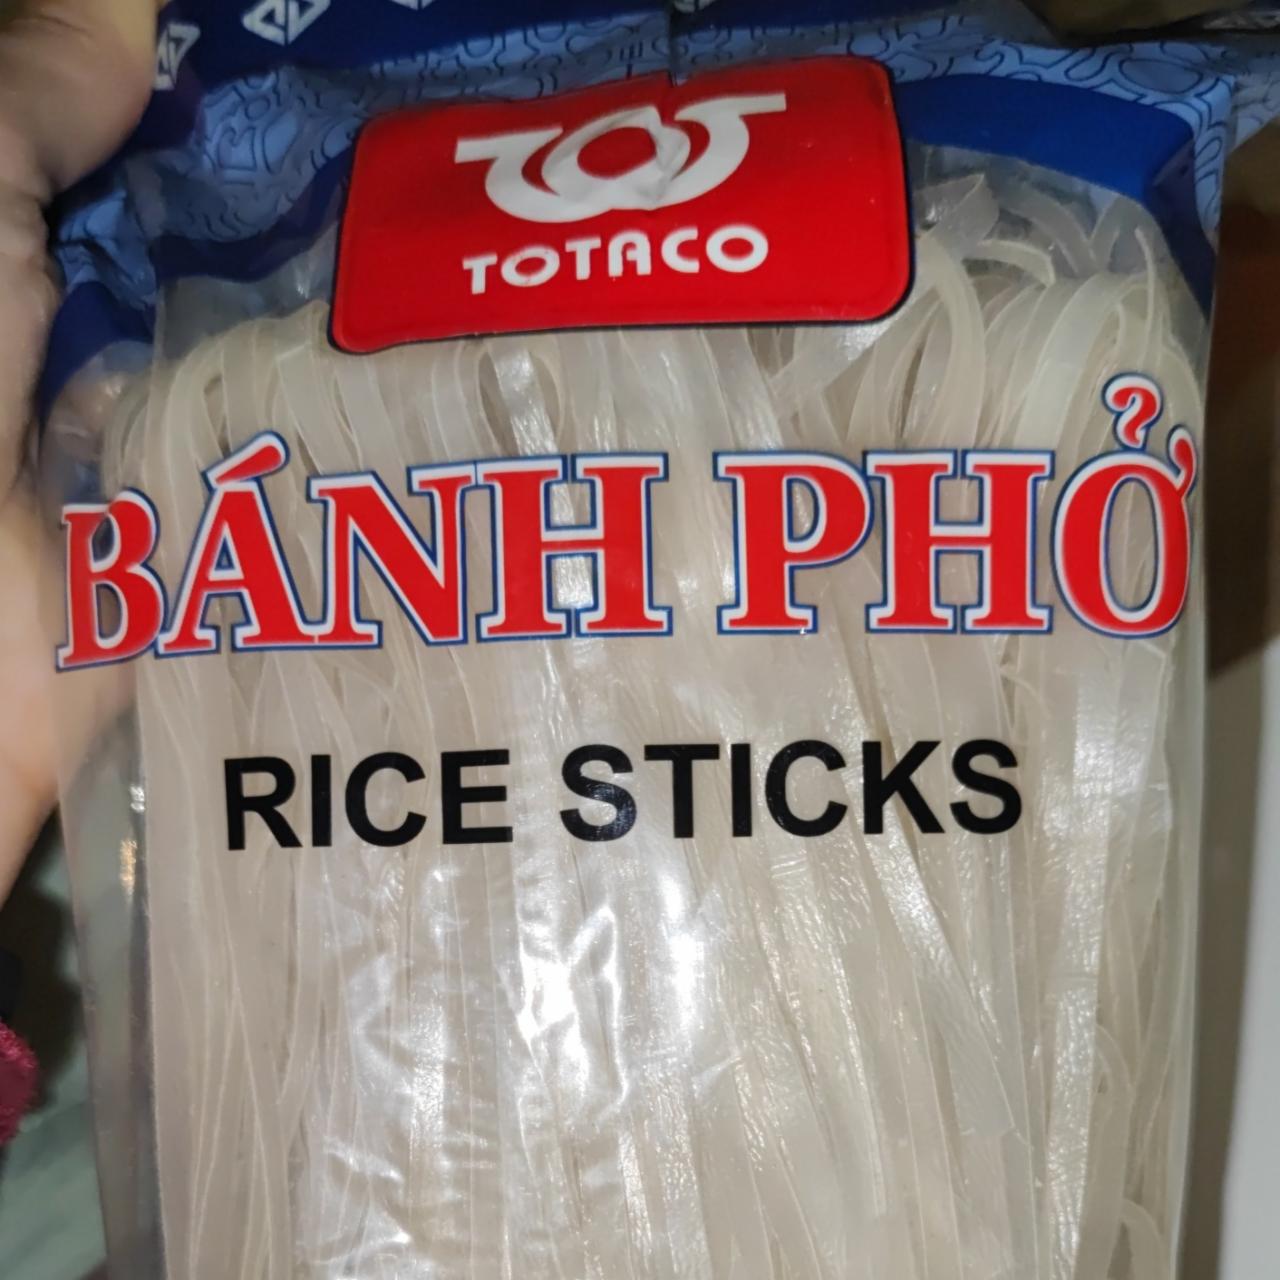 Képek - Býnh Pho rice sticks Totaco